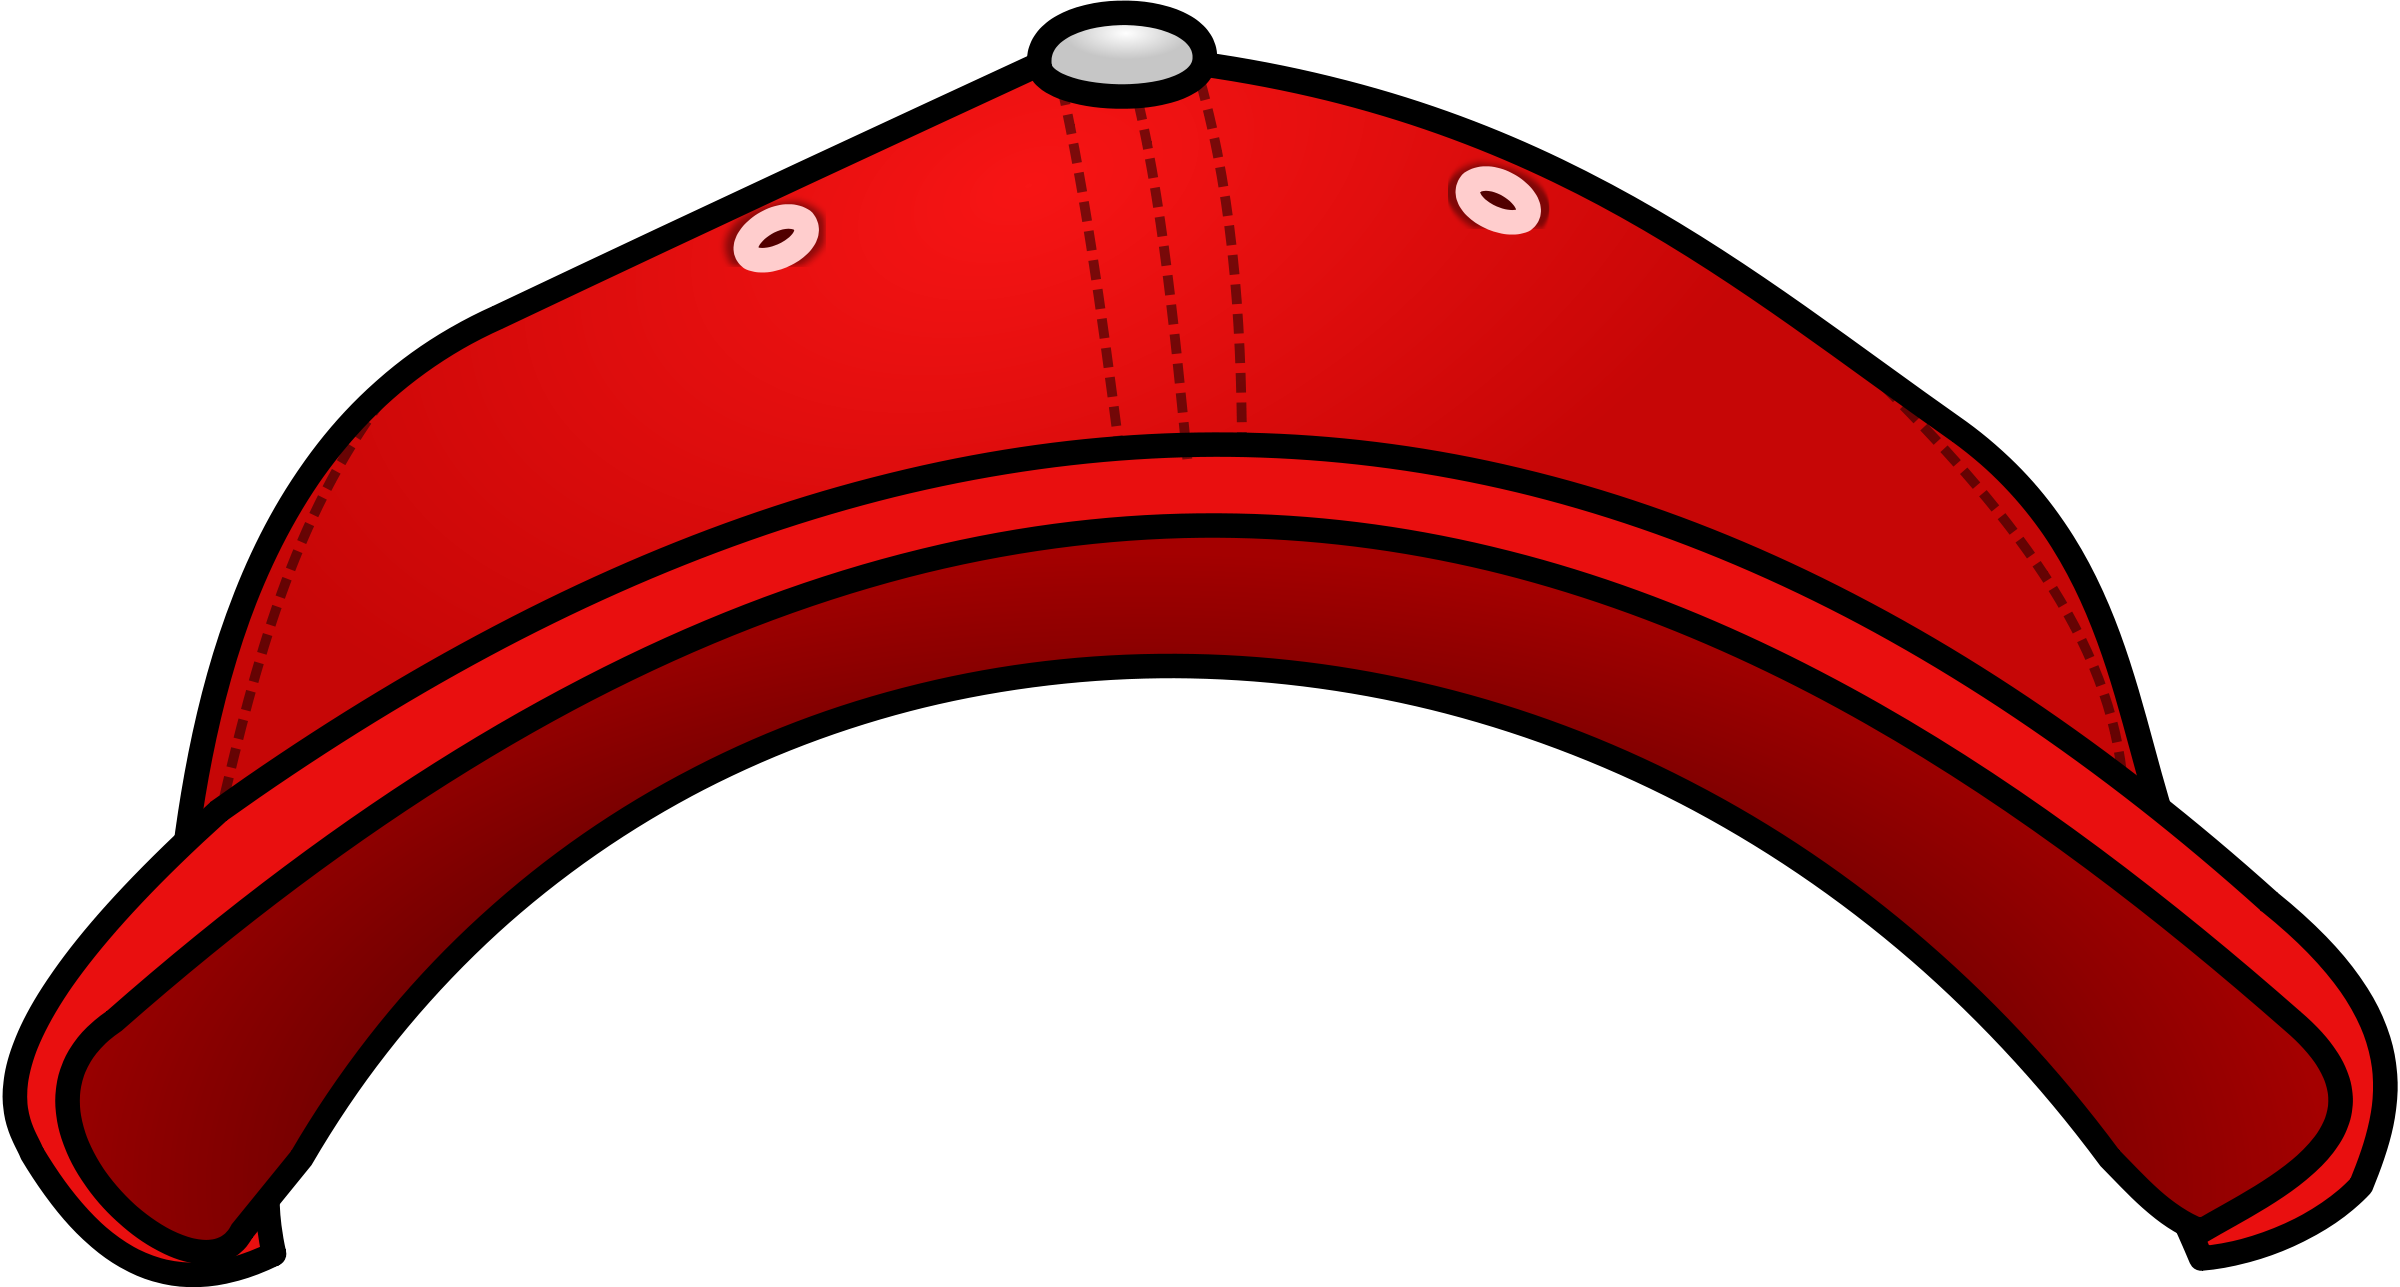 Red baseball cap clipart